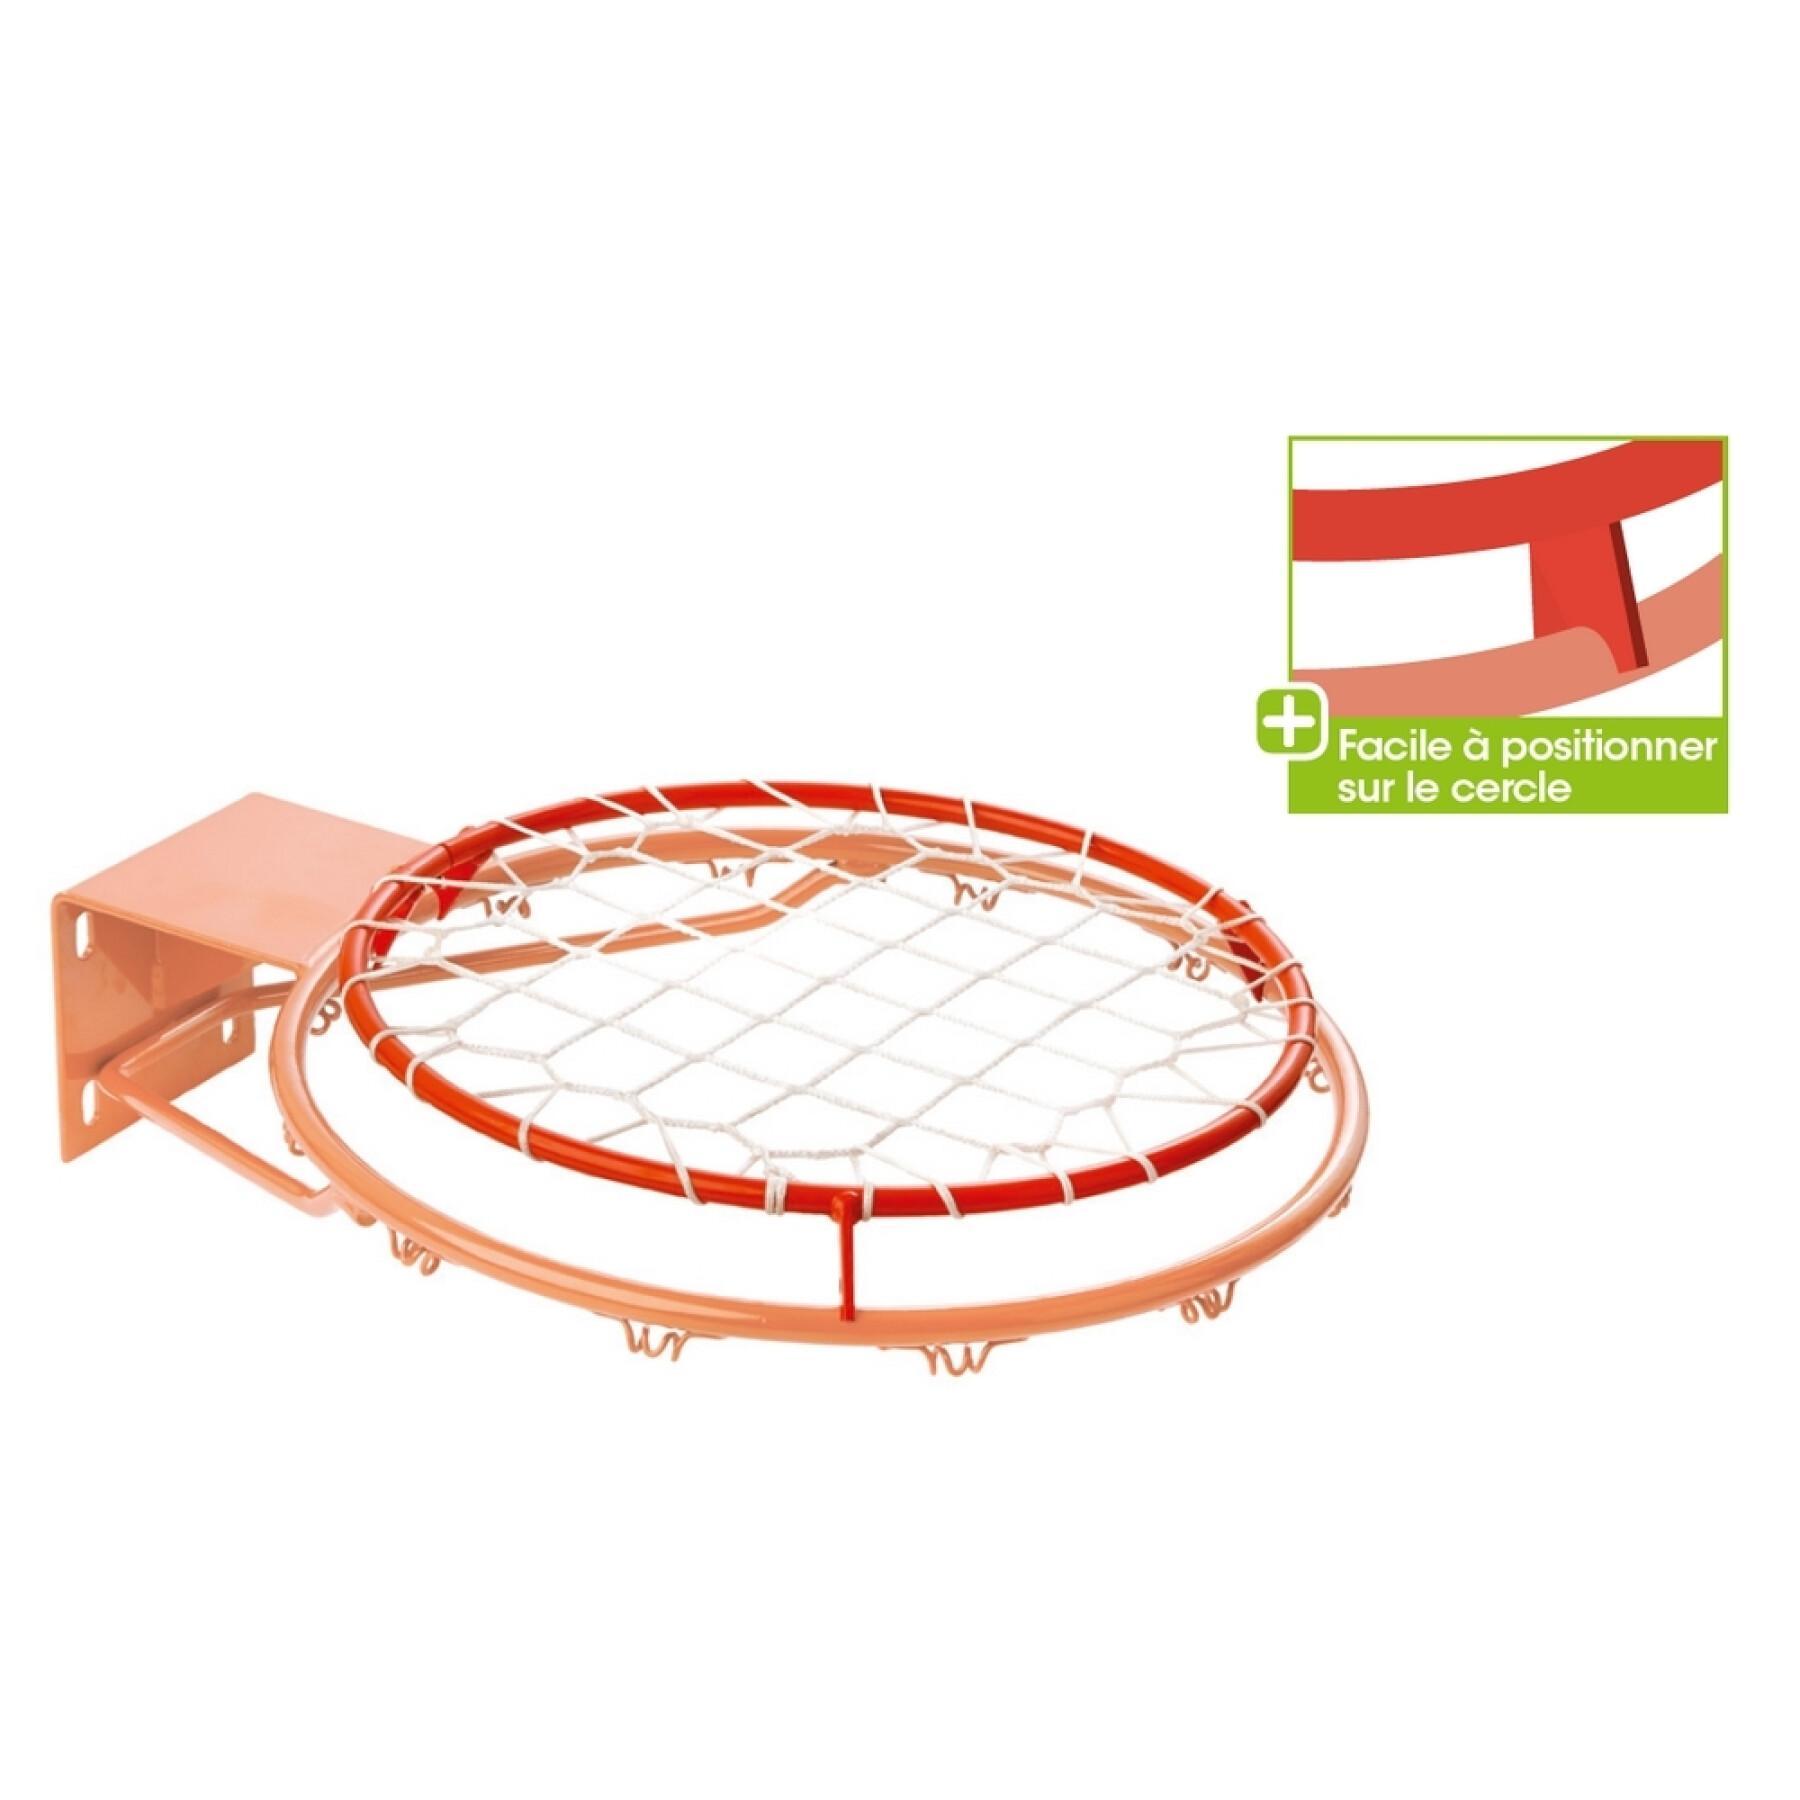 Basketball hoop obstructor tremblay